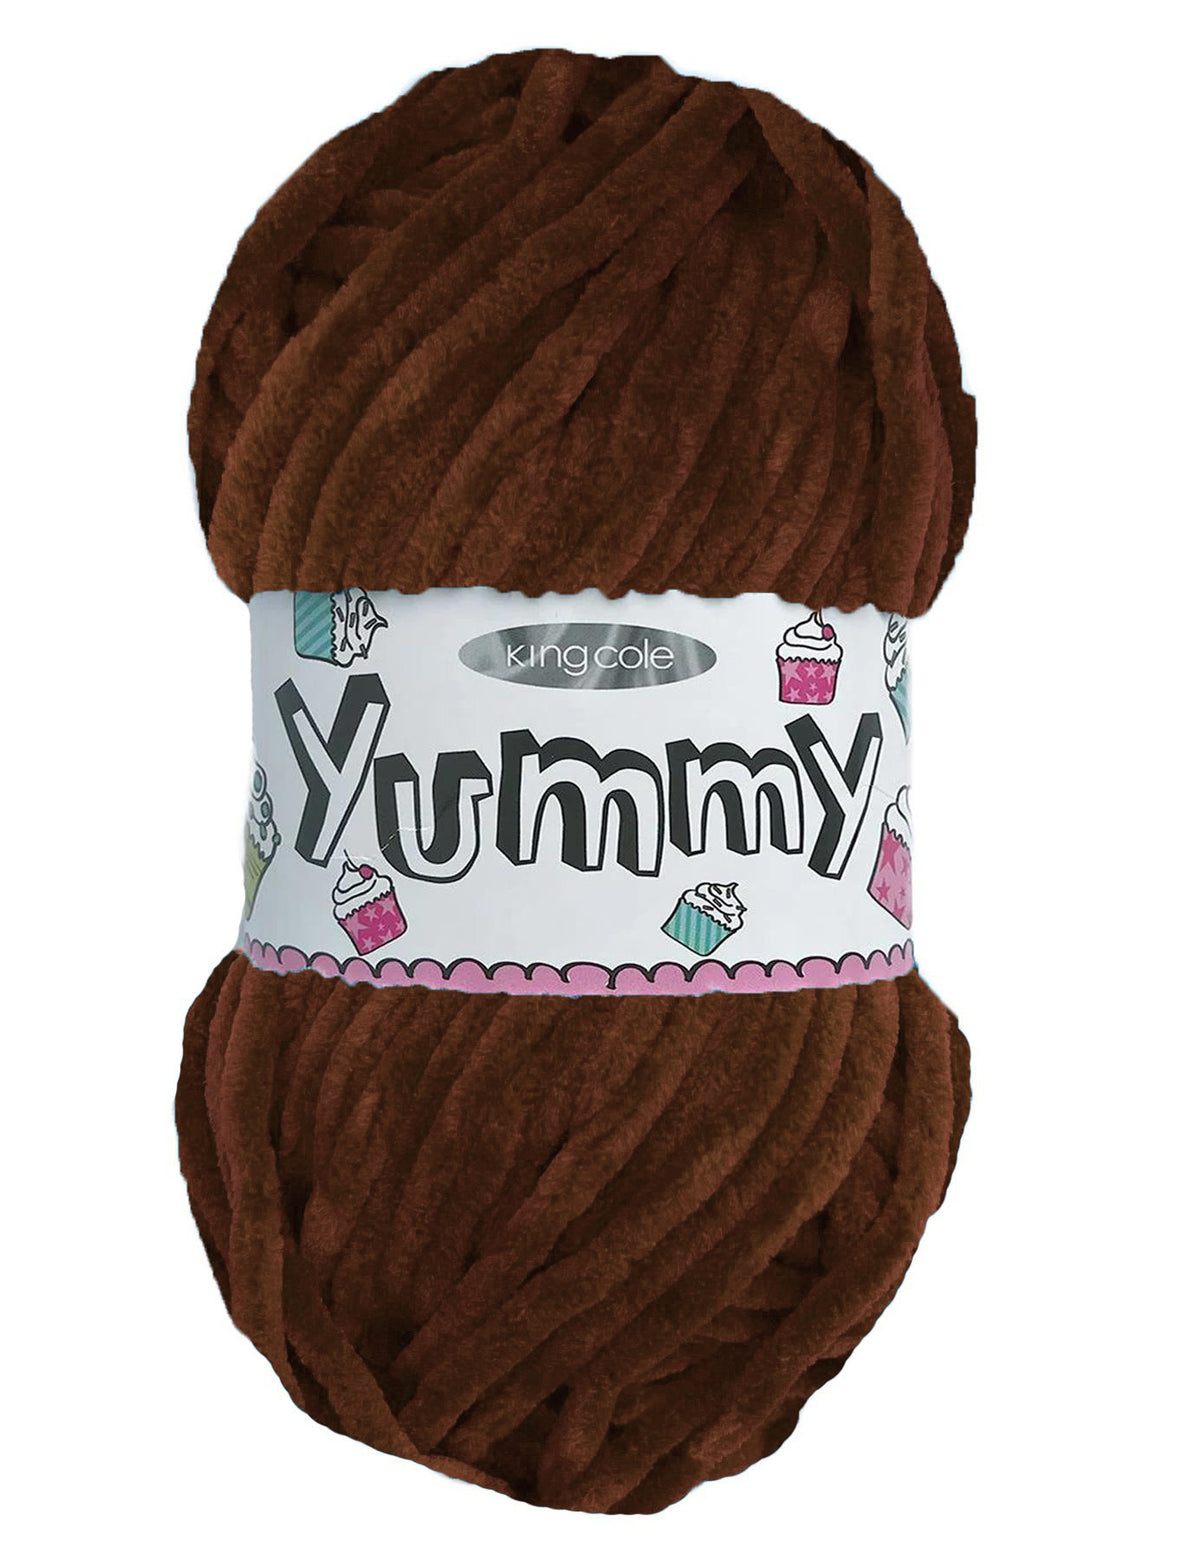 King Cole Yummy Chocolate (4759) chenille yarn - 100g